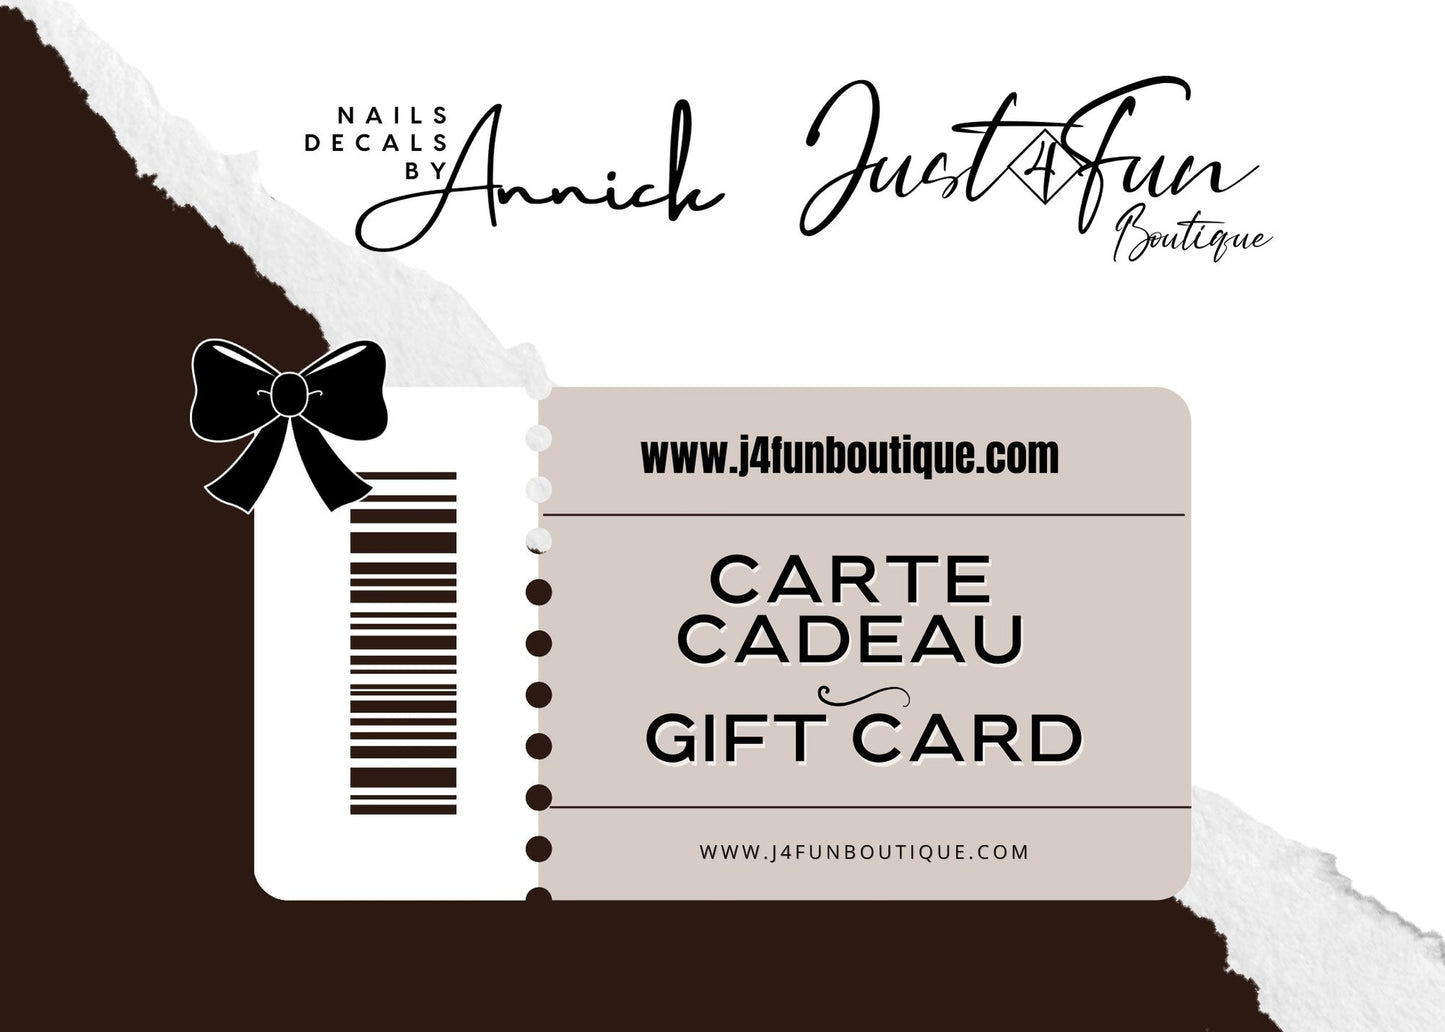 carte cadeau gift card www.j4funboutique.com